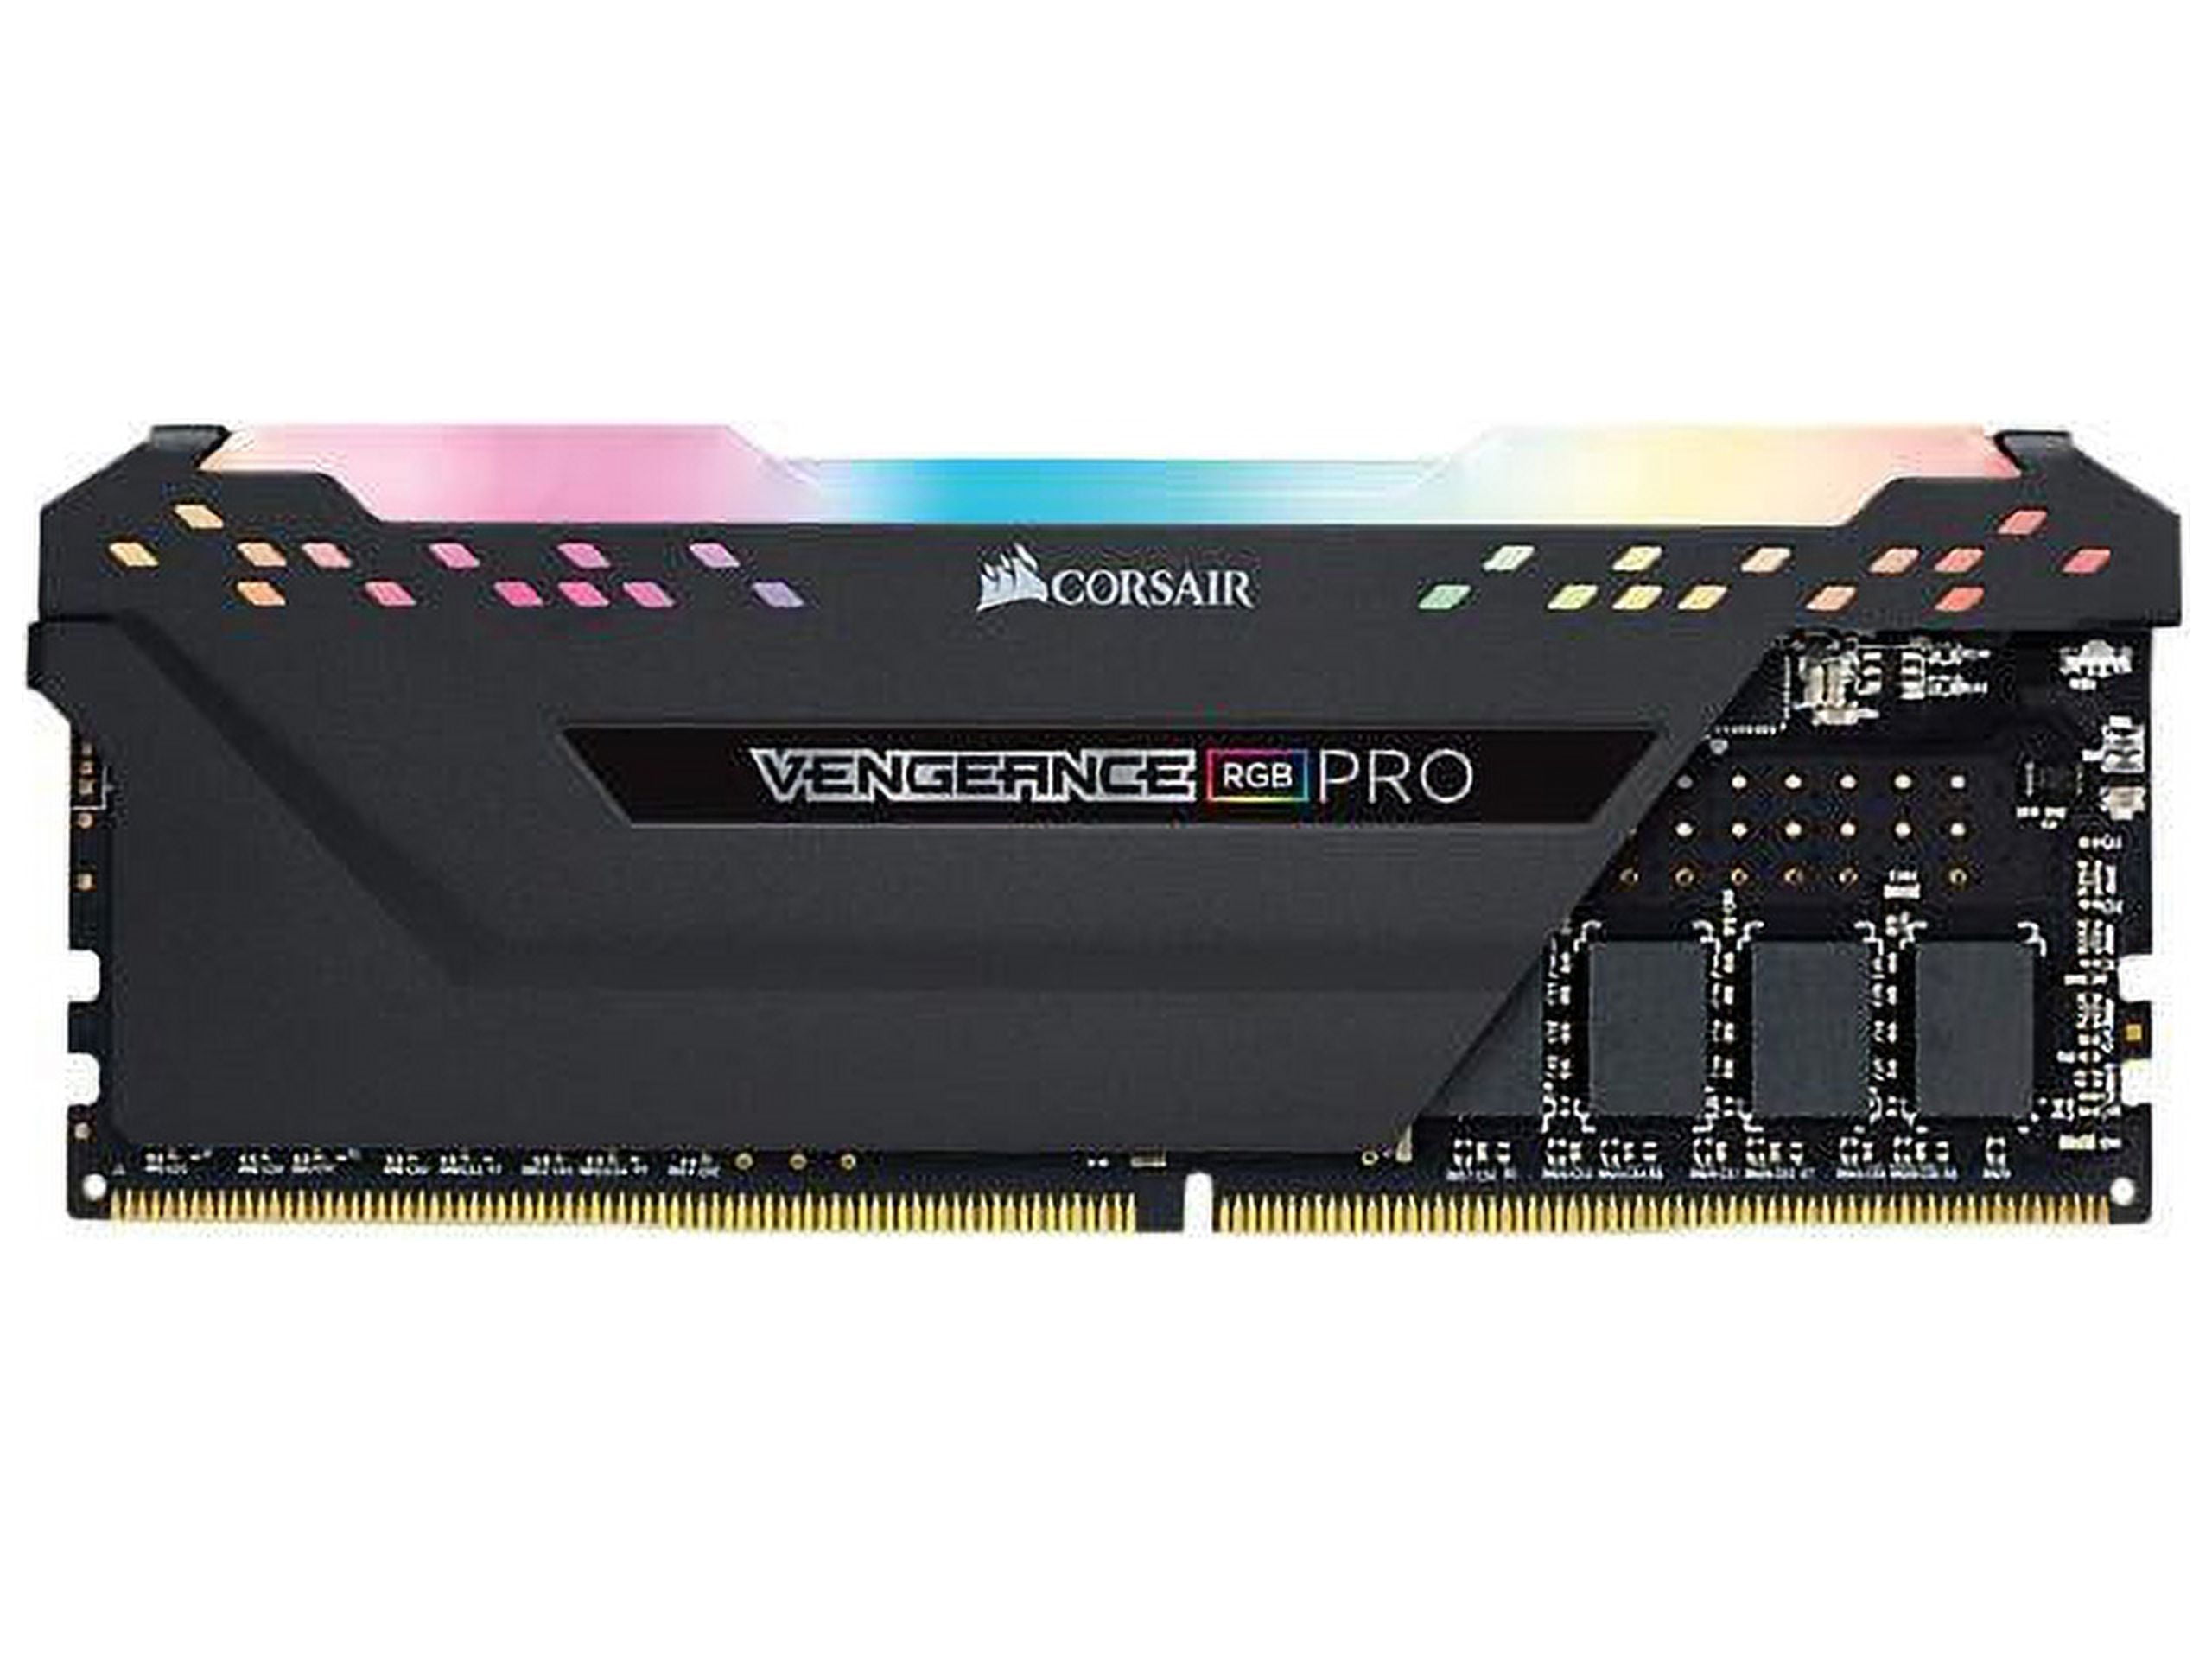 FS: Corsair Vengeance RGB 16GB DDR4 3200mhz (2x8GB) [SOLD], [H]ard